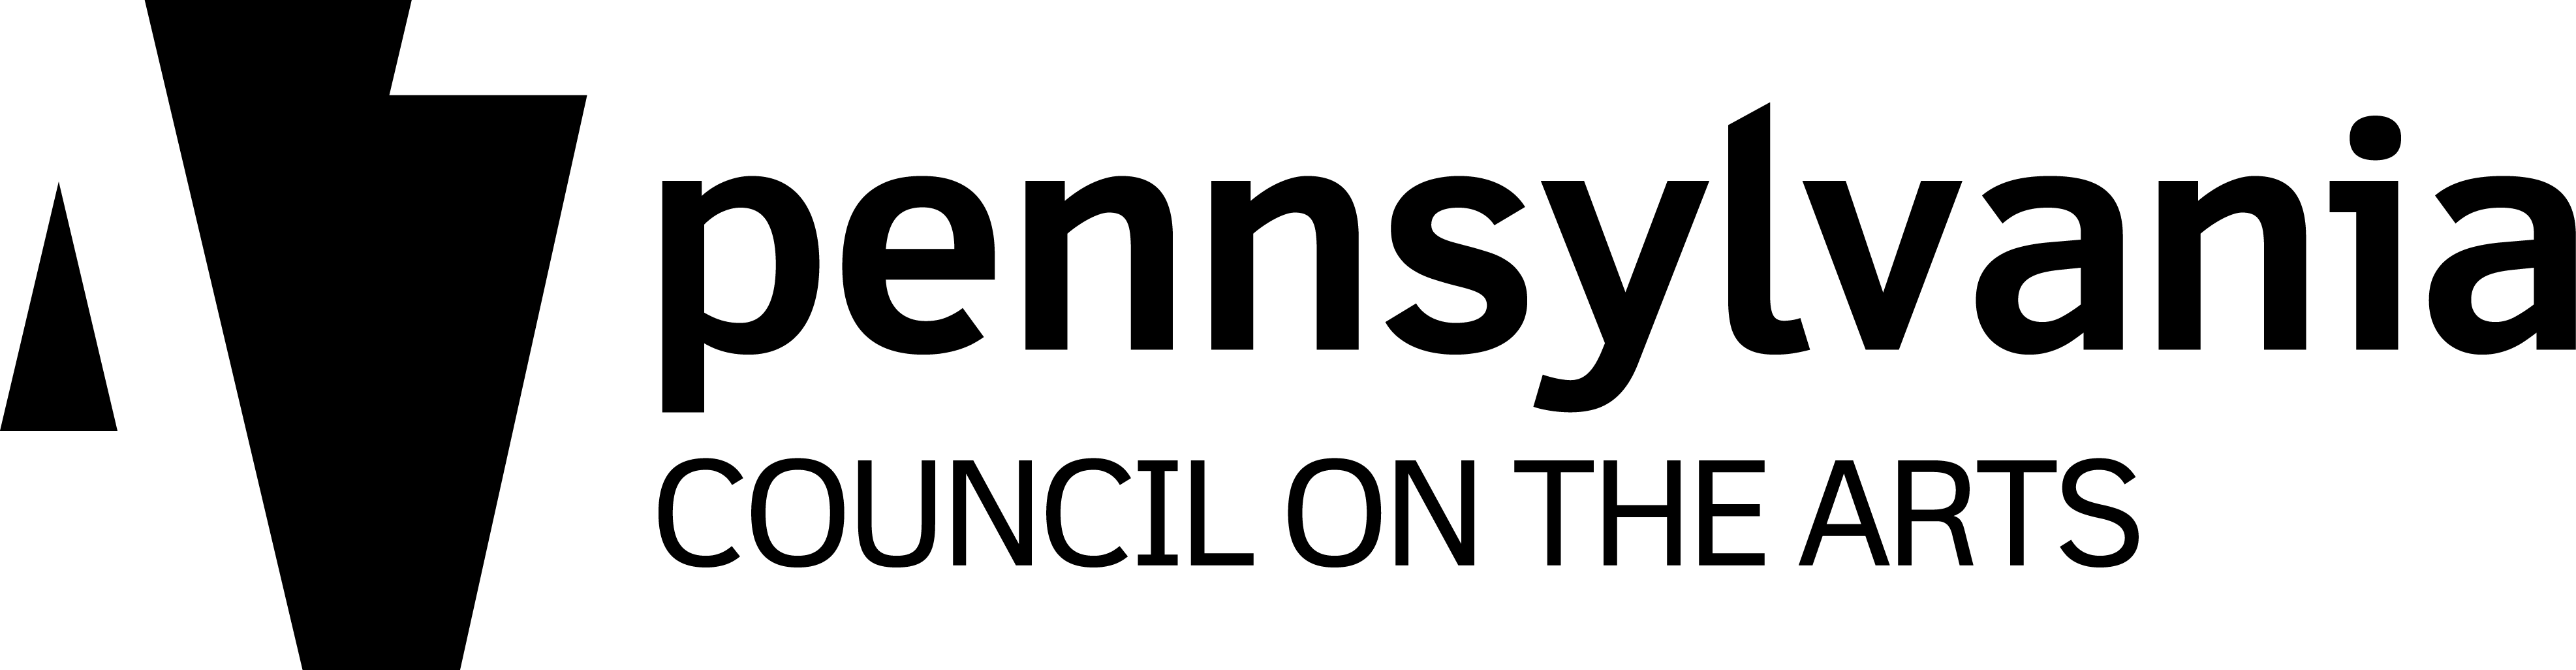 PCA logo black 1